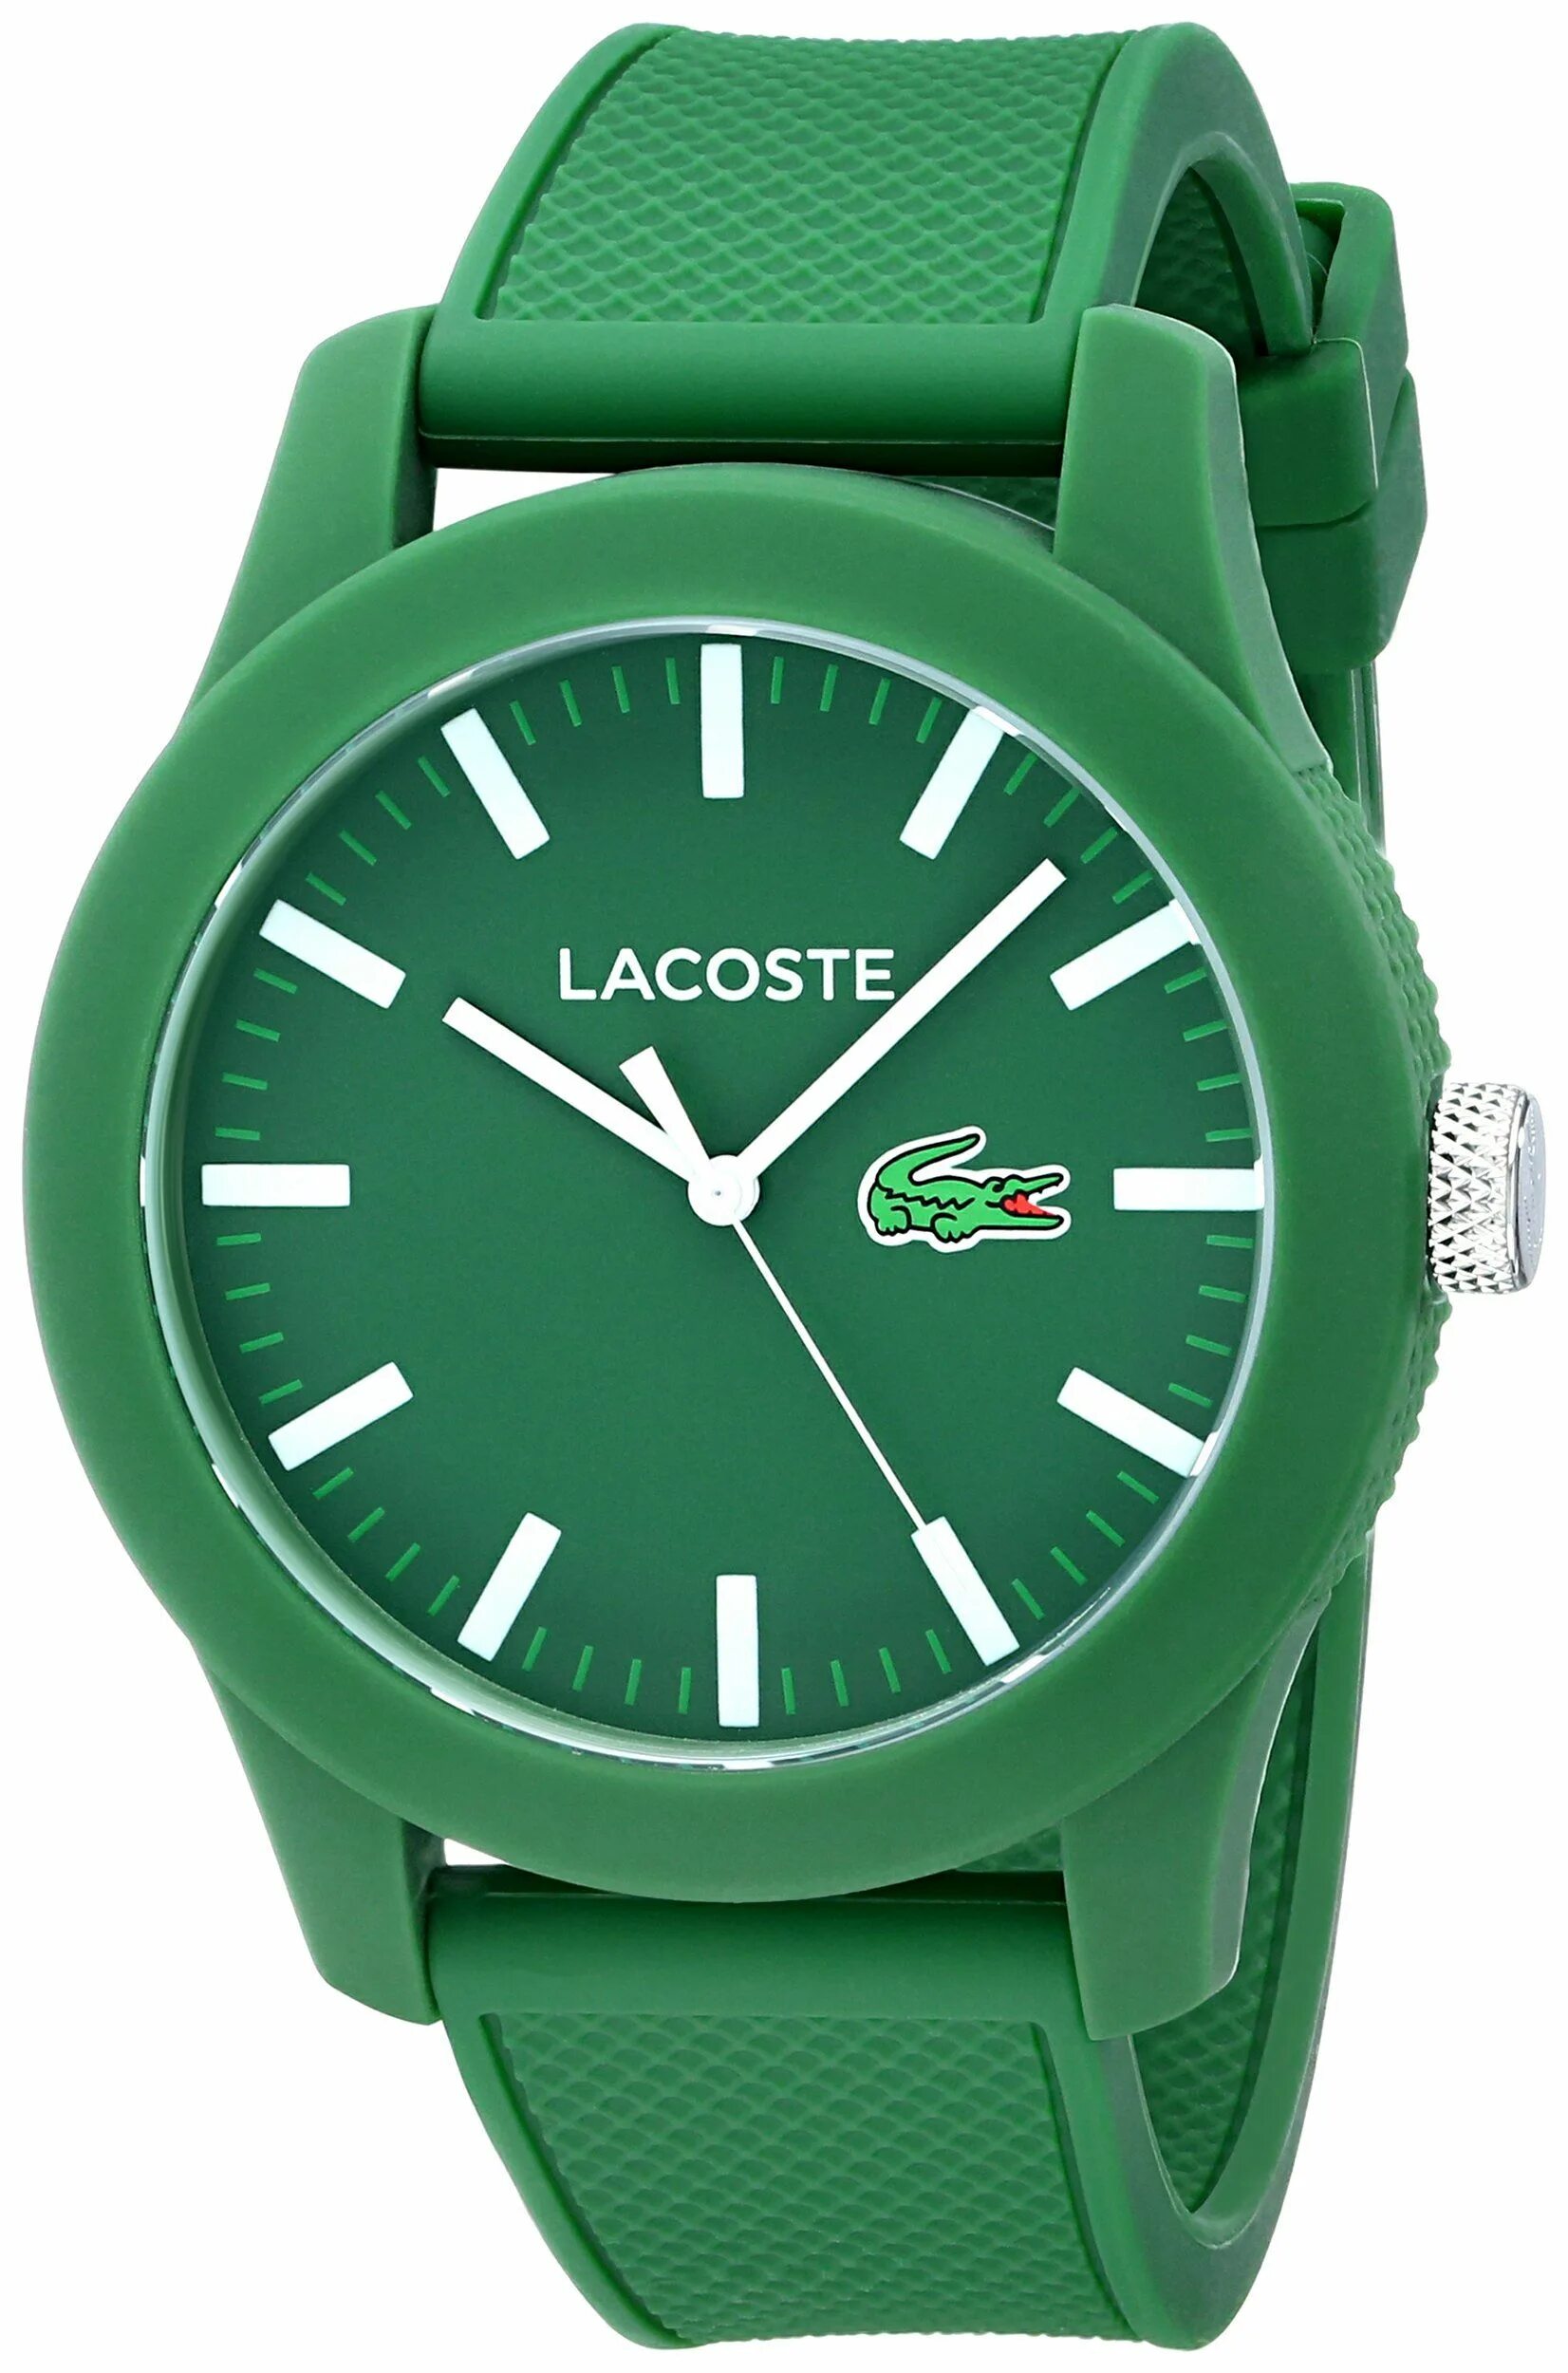 Часы Lacoste 12.12 Green. Часы лакост мужские 2502. Часы лакост мужские. Lacoste Goa 2020058 Green Silicone Analog Quartz with Silver Dial, мужские часы. Green сколько стоит